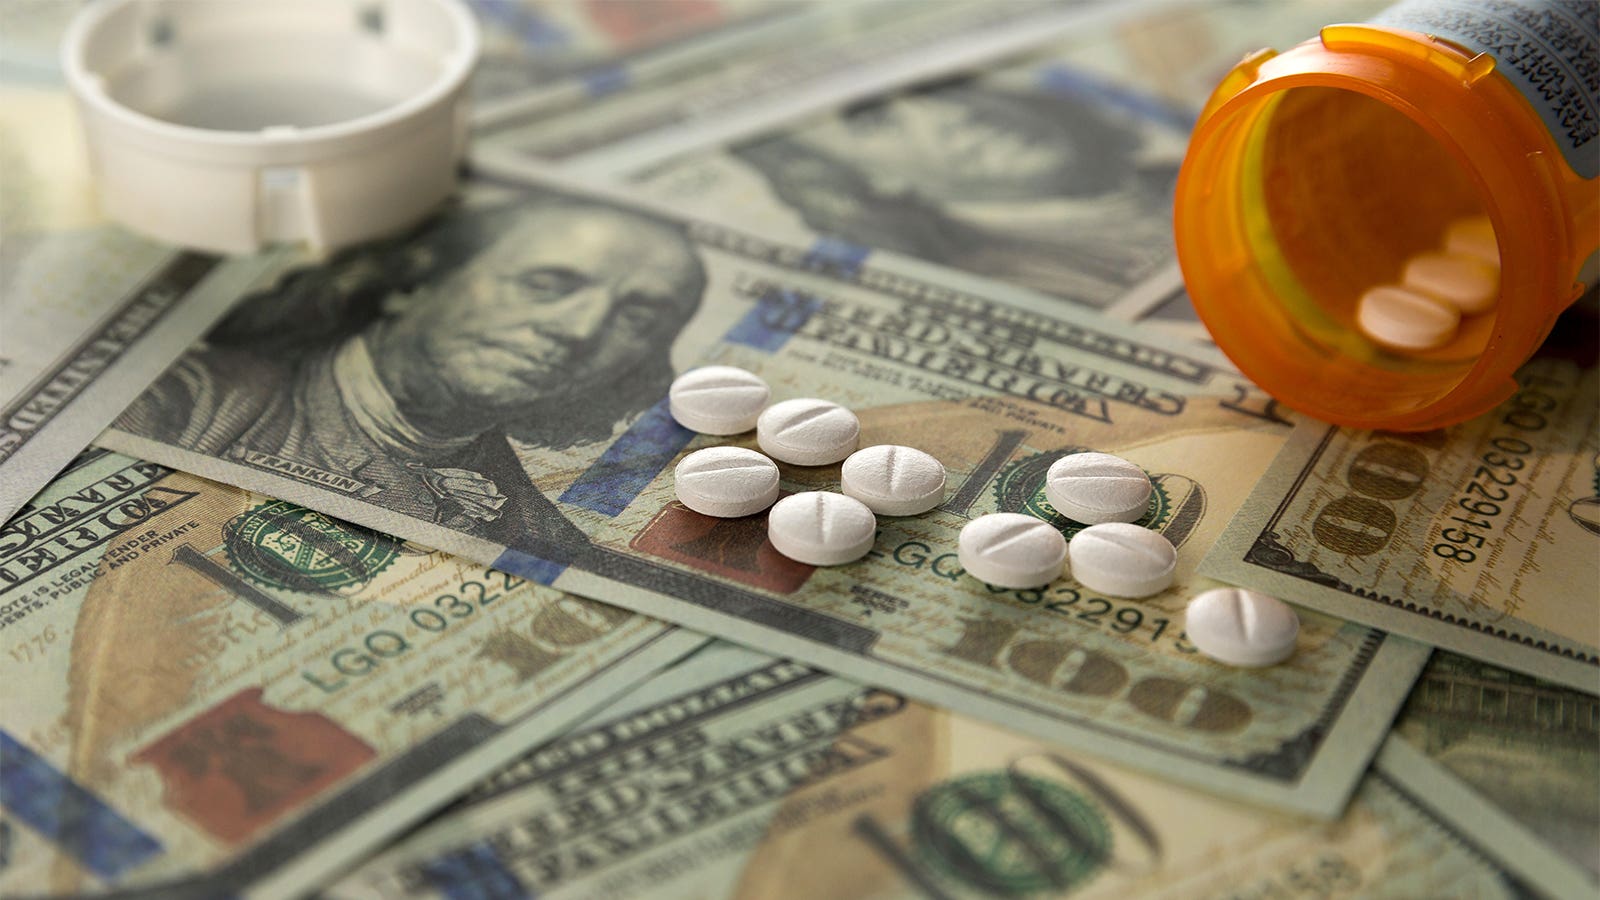 Medicare Sends Preliminary Brand Negotiation Bids to Drugmakers